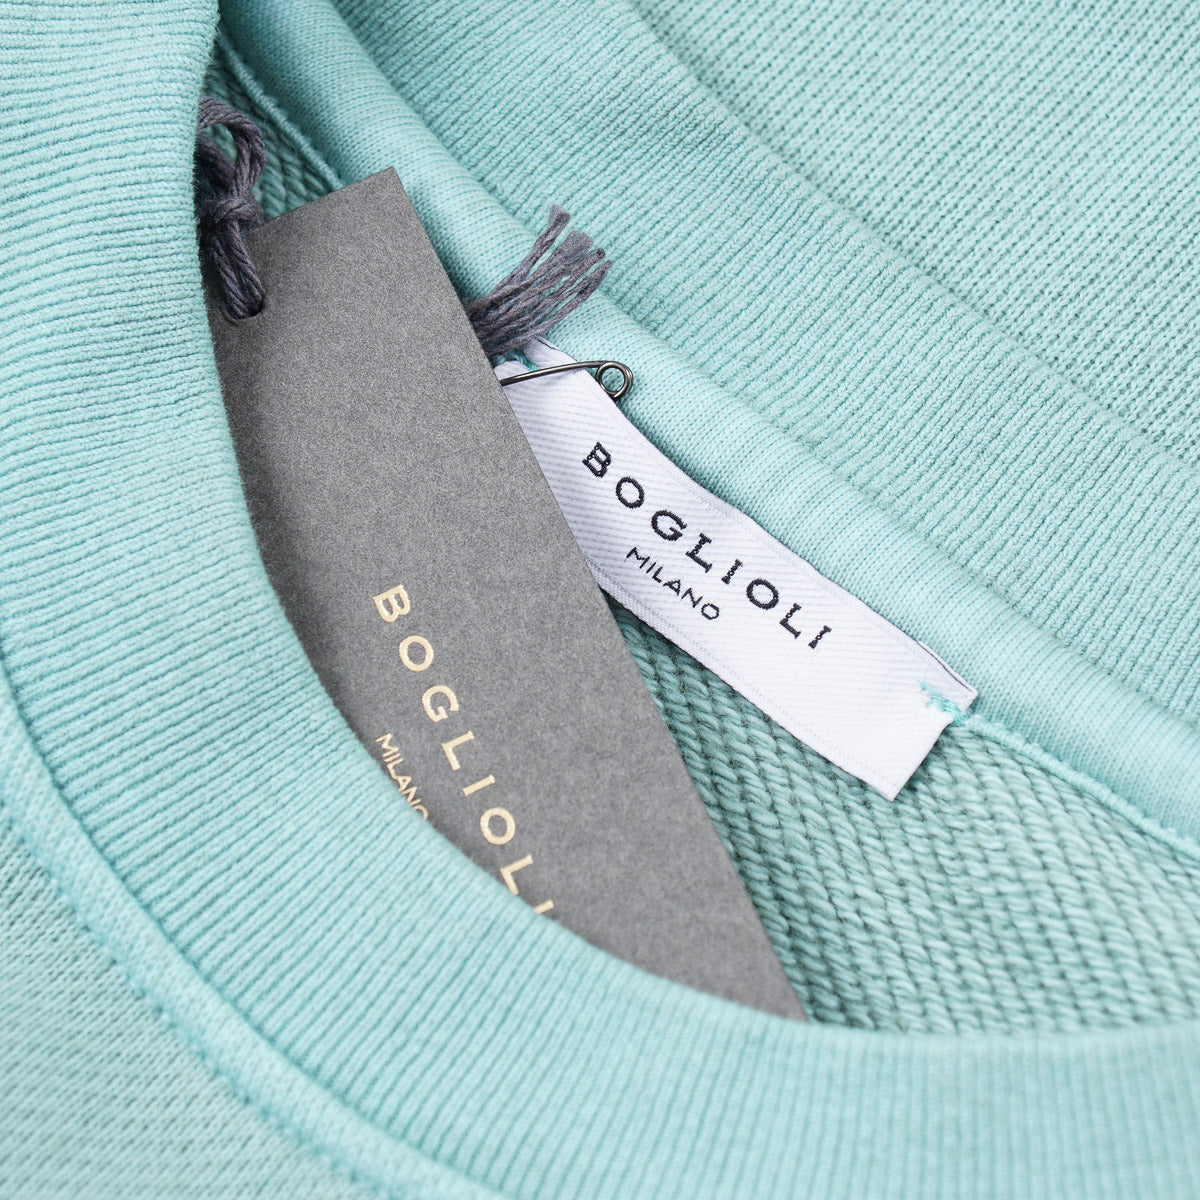 Boglioli Garment-Washed Cotton Sweatshirt - Top Shelf Apparel